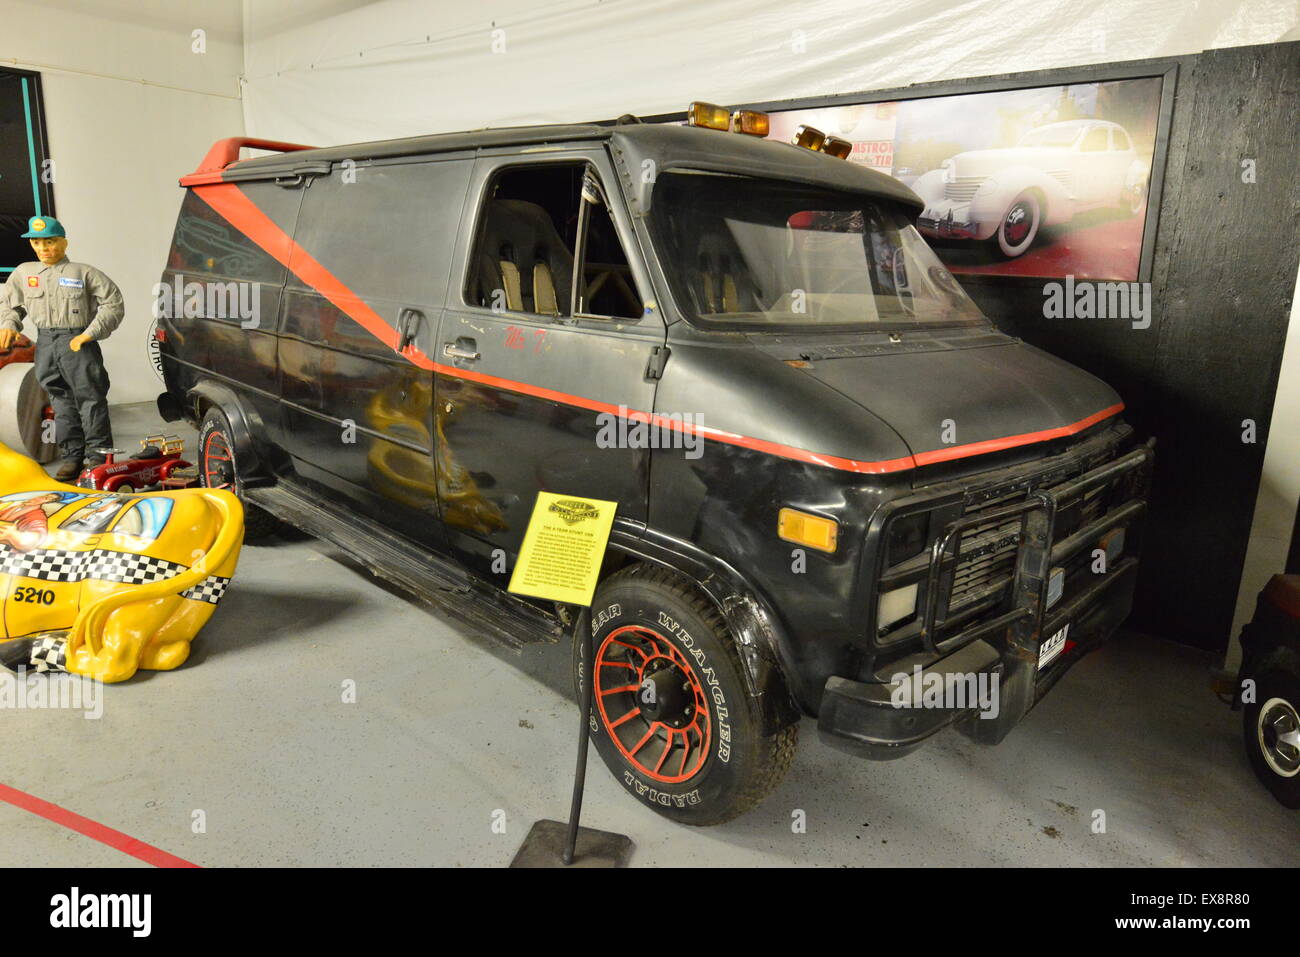 The A team stunt van. Stock Photo